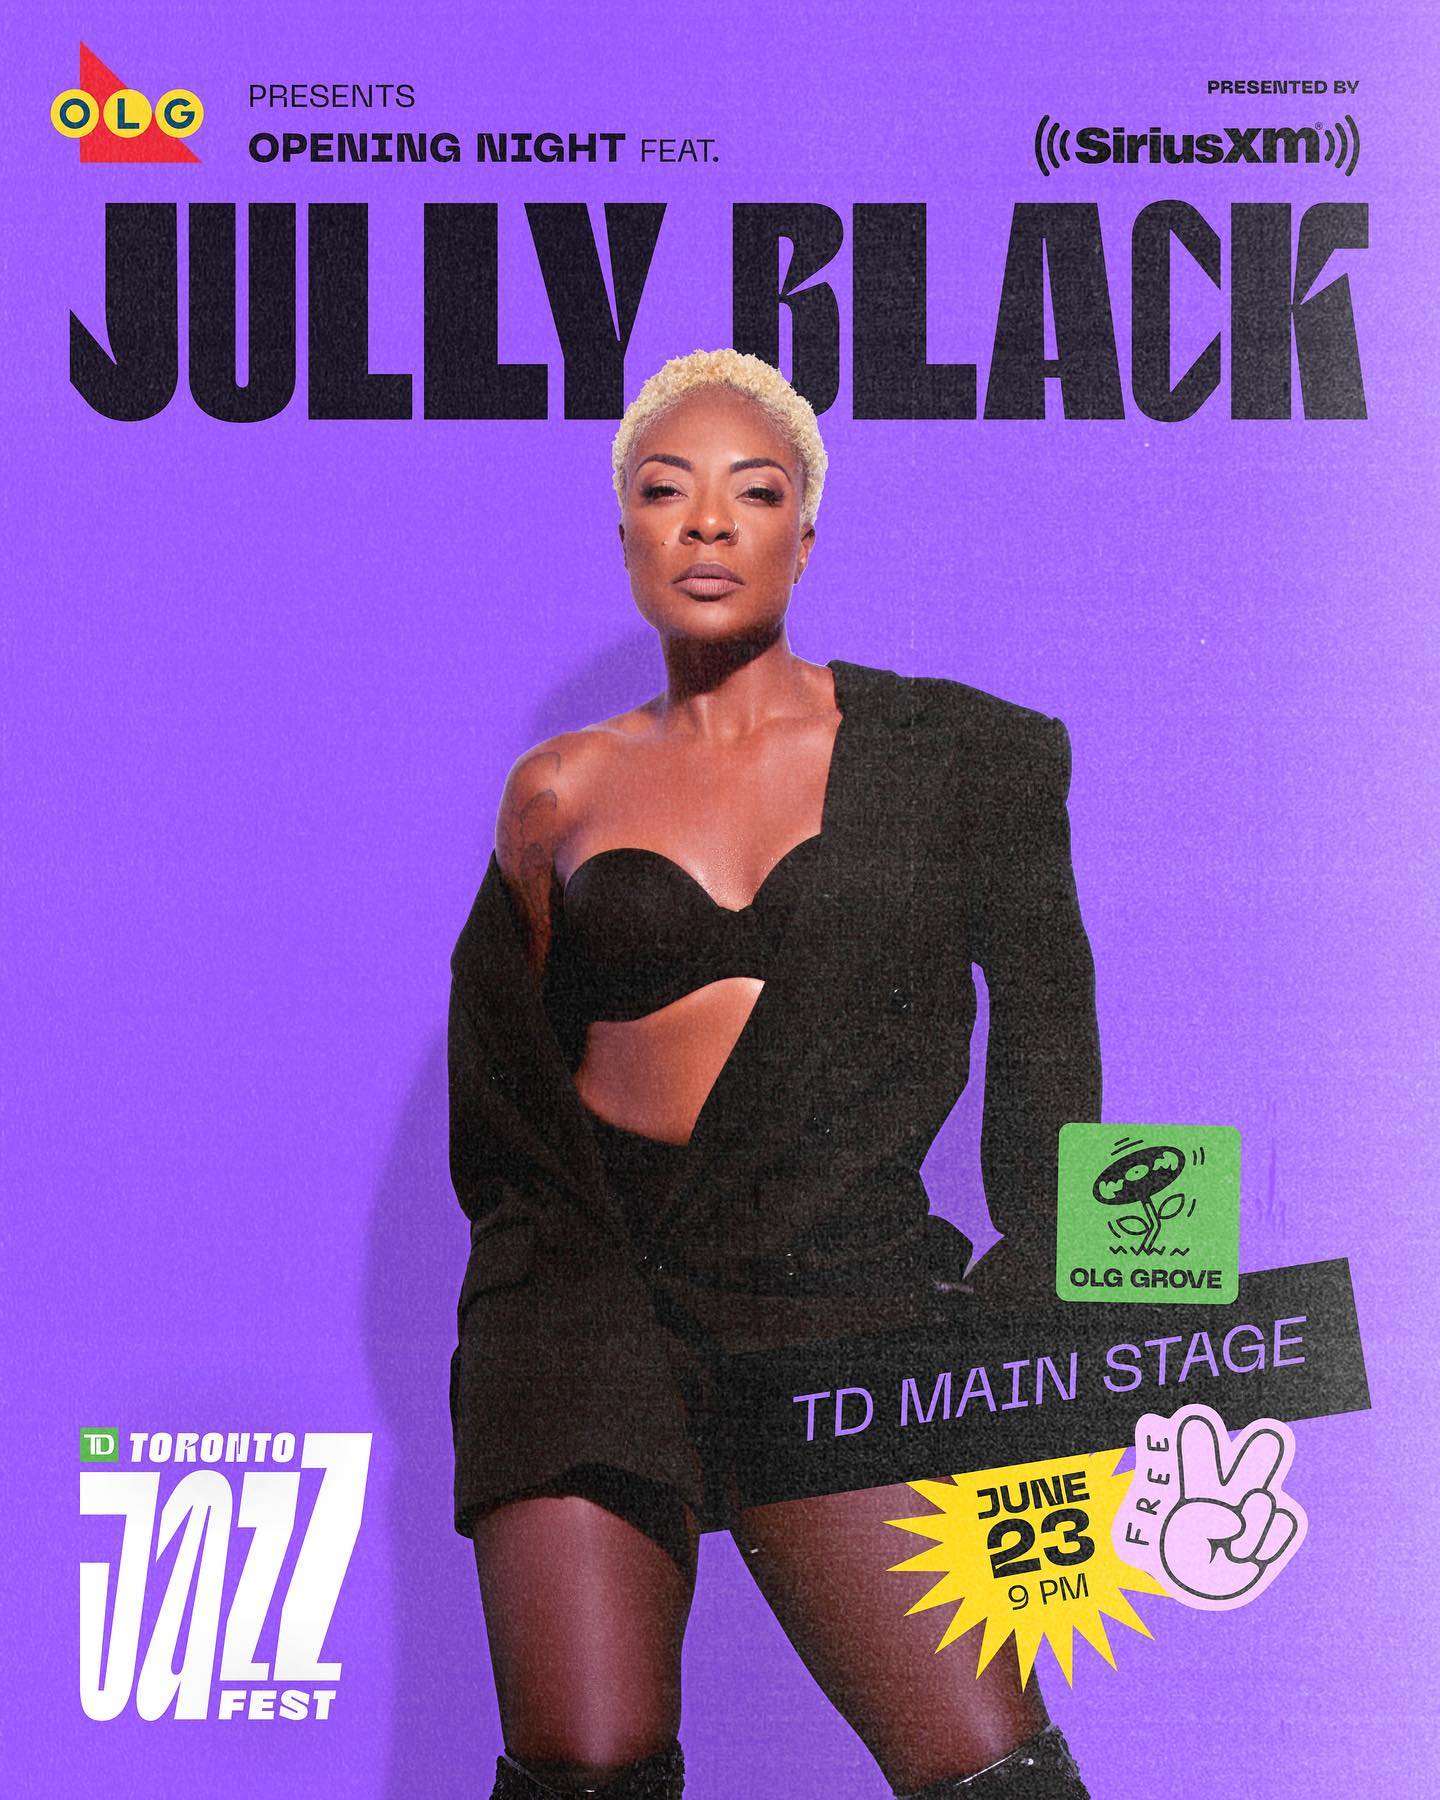 Jully Black TD Toronto Jazz Festival